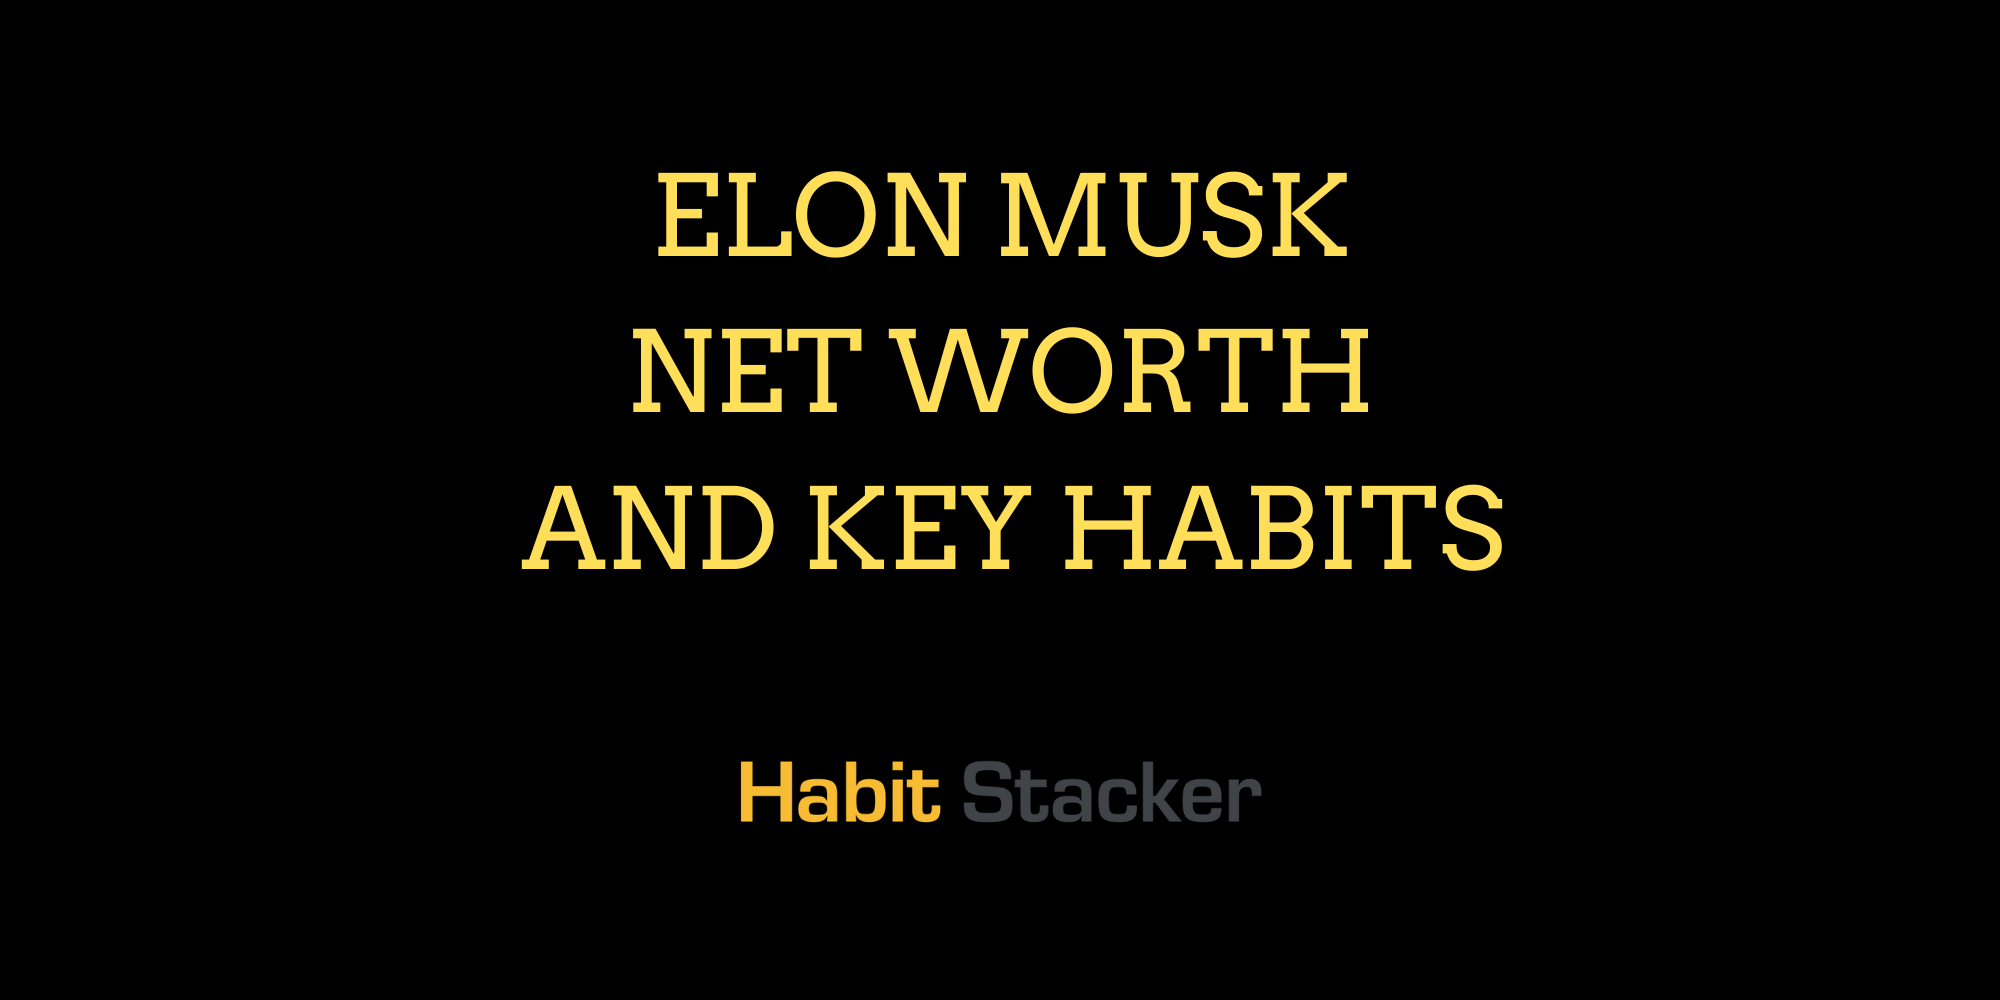 Elon Musk Net Worth and Key Habits